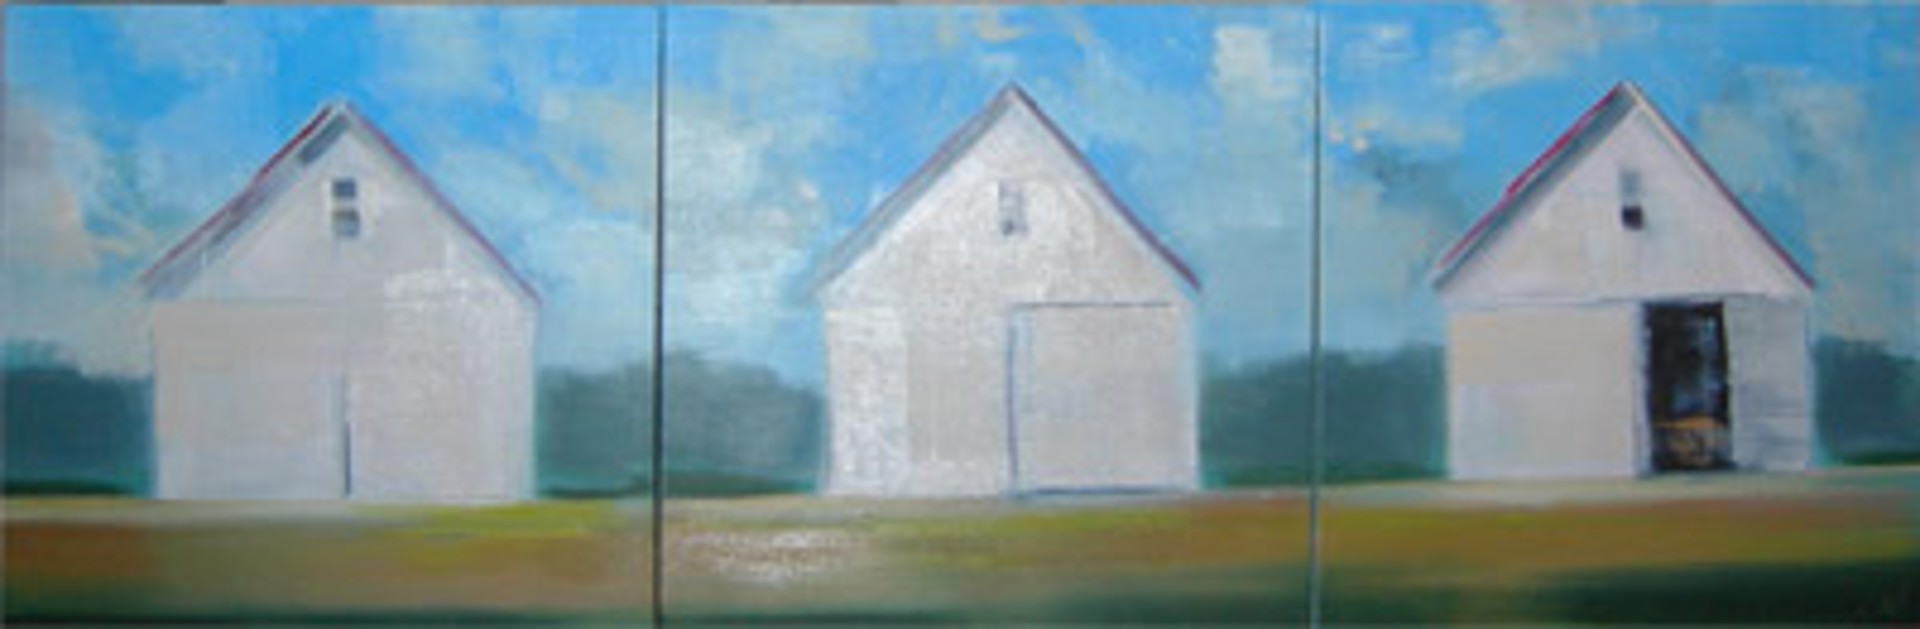 White Barn Triptych by Craig Mooney